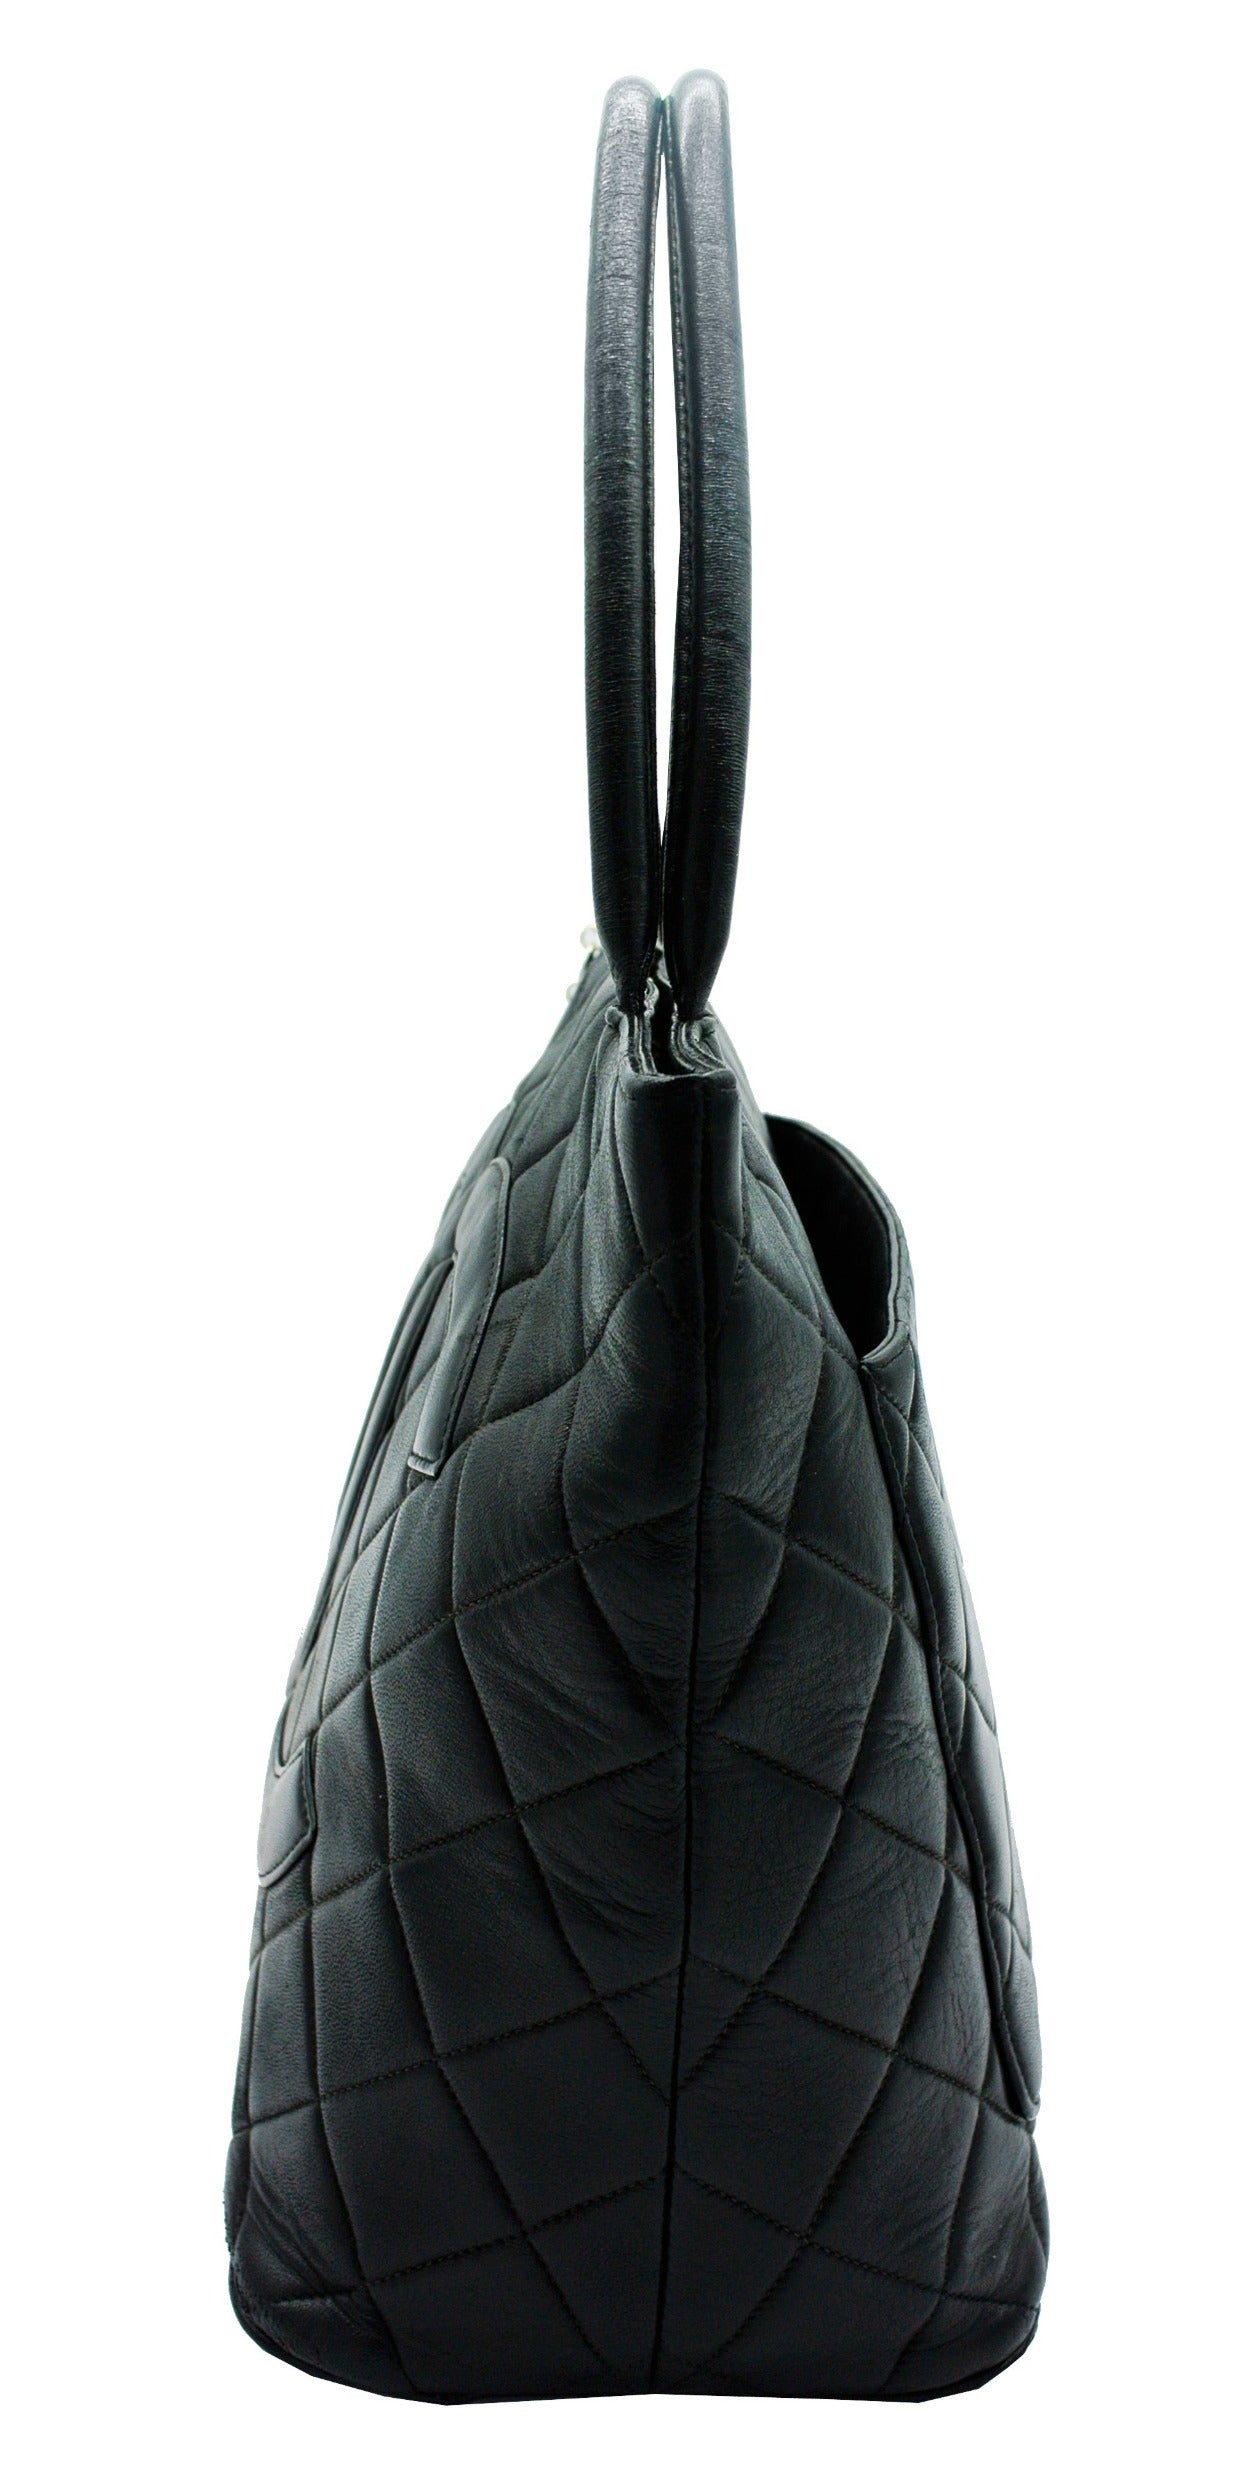 Chanel Black Leather Medallion Tote Bag Chanel